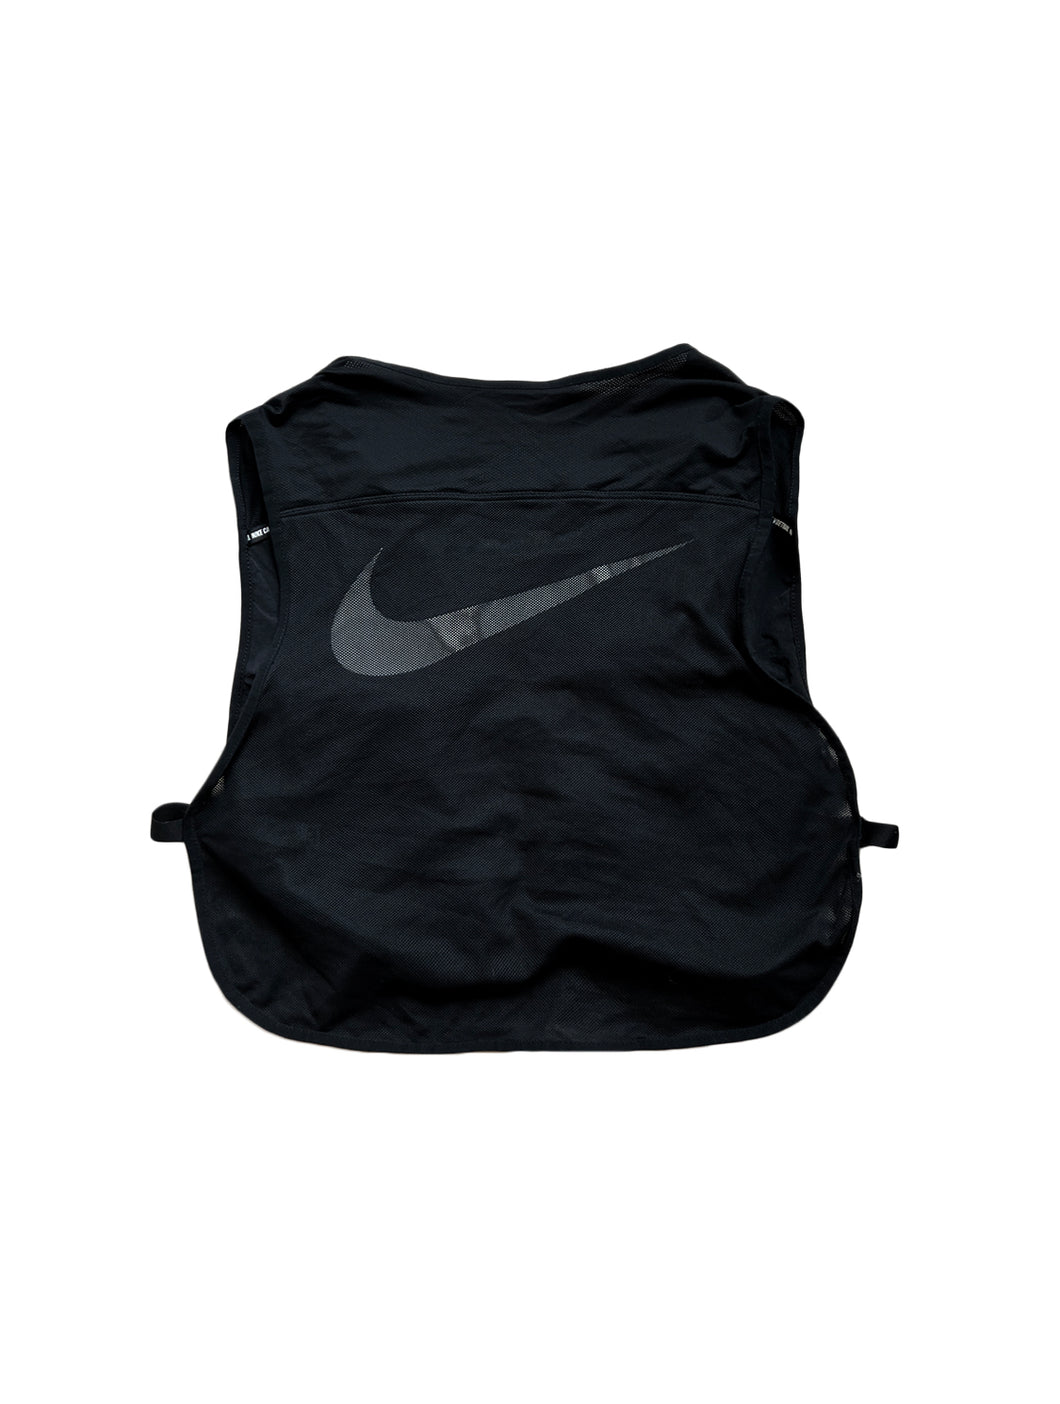 Nike Black Technical Vest